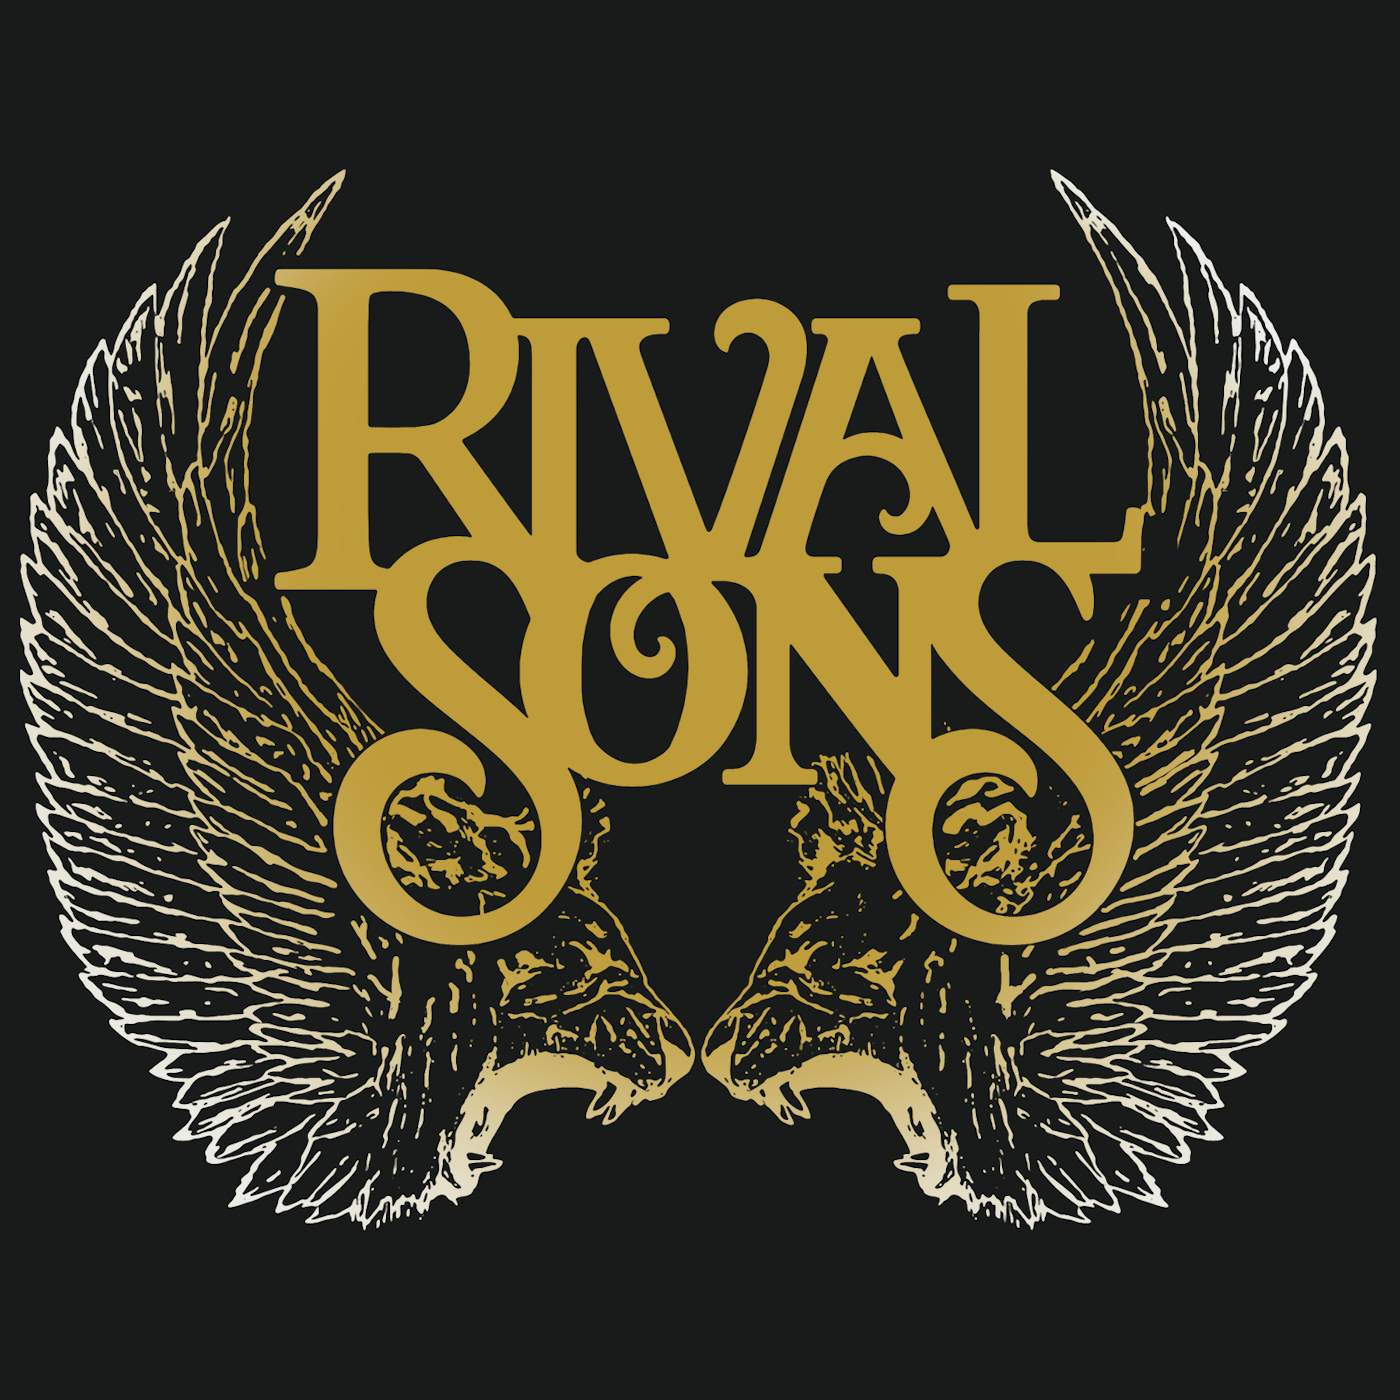 Rival Sons T-Shirt | Official Logo Rival Sons Shirt